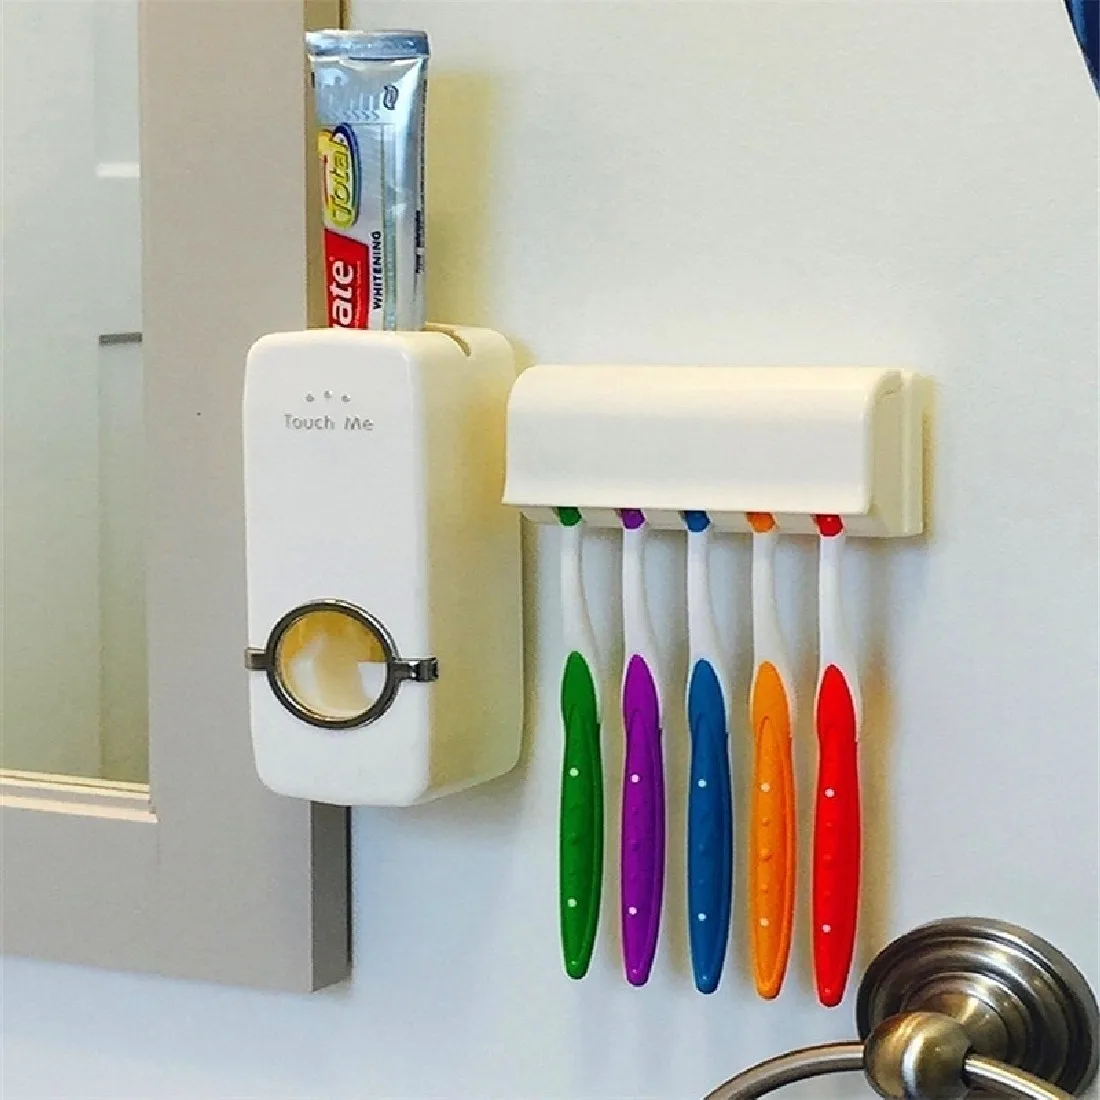 Self-adhesive 5 Toothbrush Holder Wall Mount Stand Organiser Tool UK 